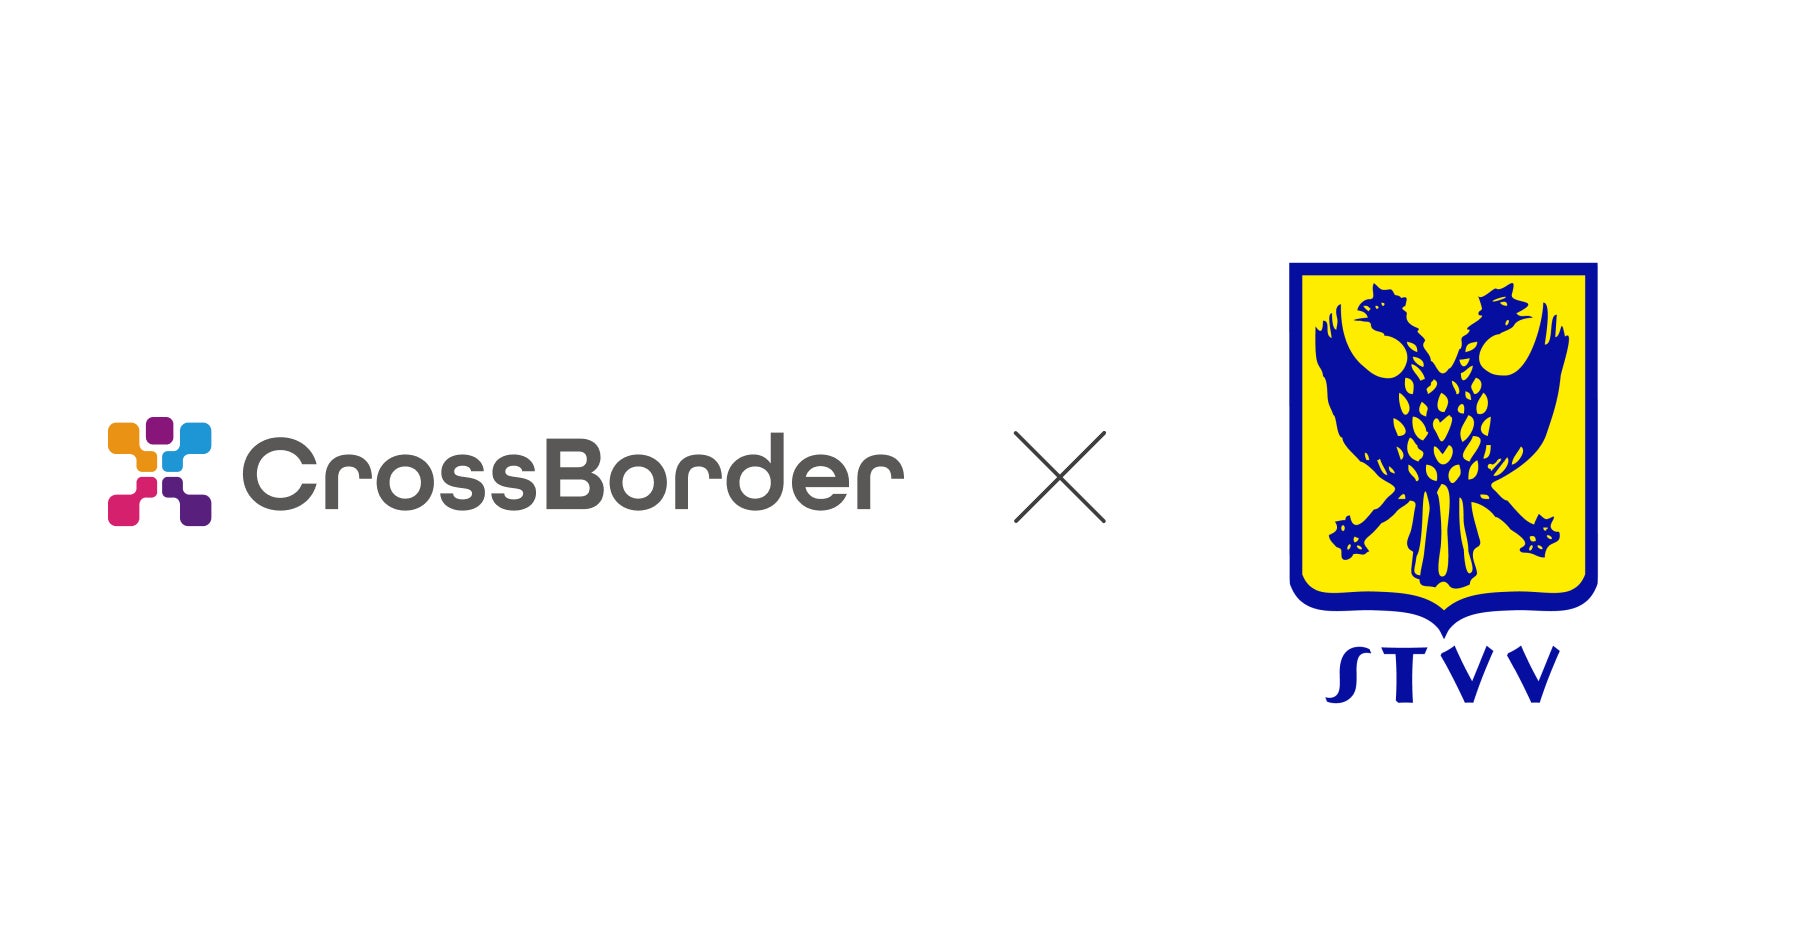 CrossBorder株式会社、シント＝トロイデンVV（STVV）とスポンサー契約を締結